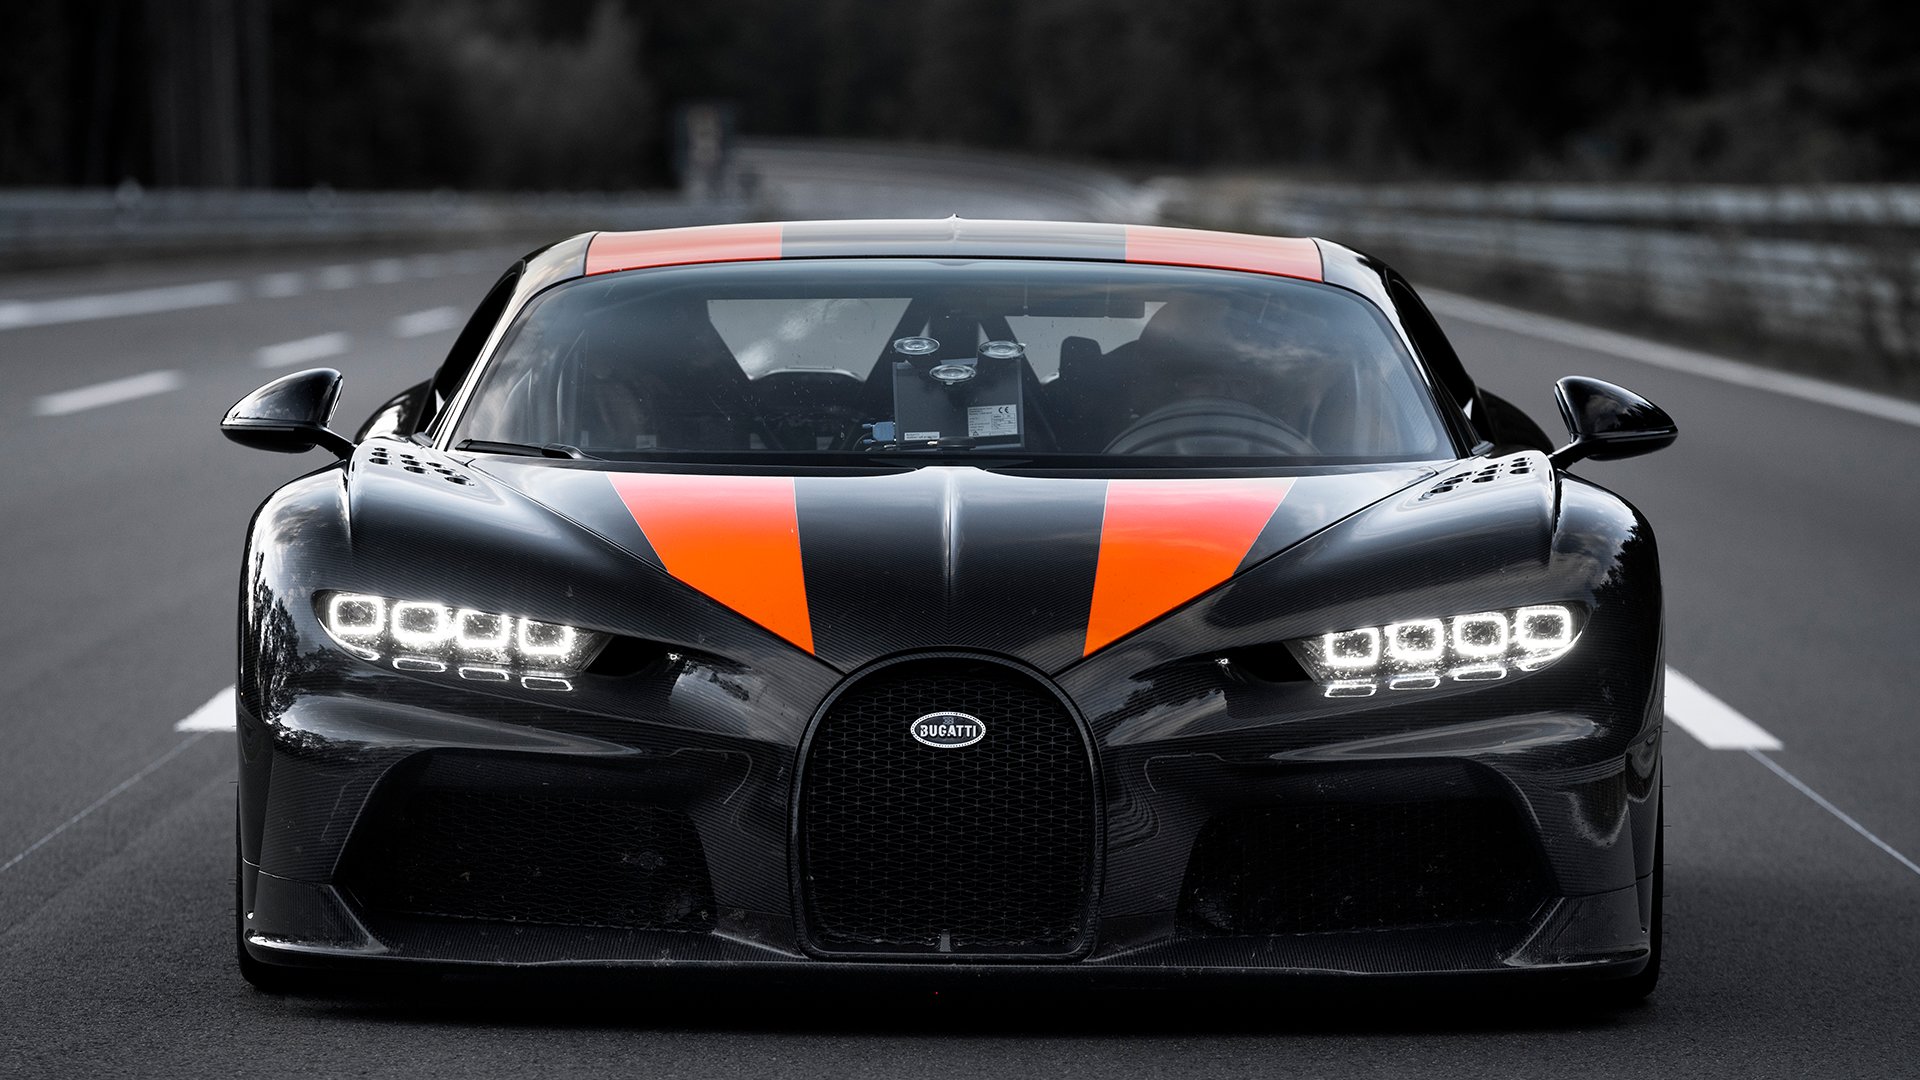 Bugatti Chiron breaks 300 mph barrier 